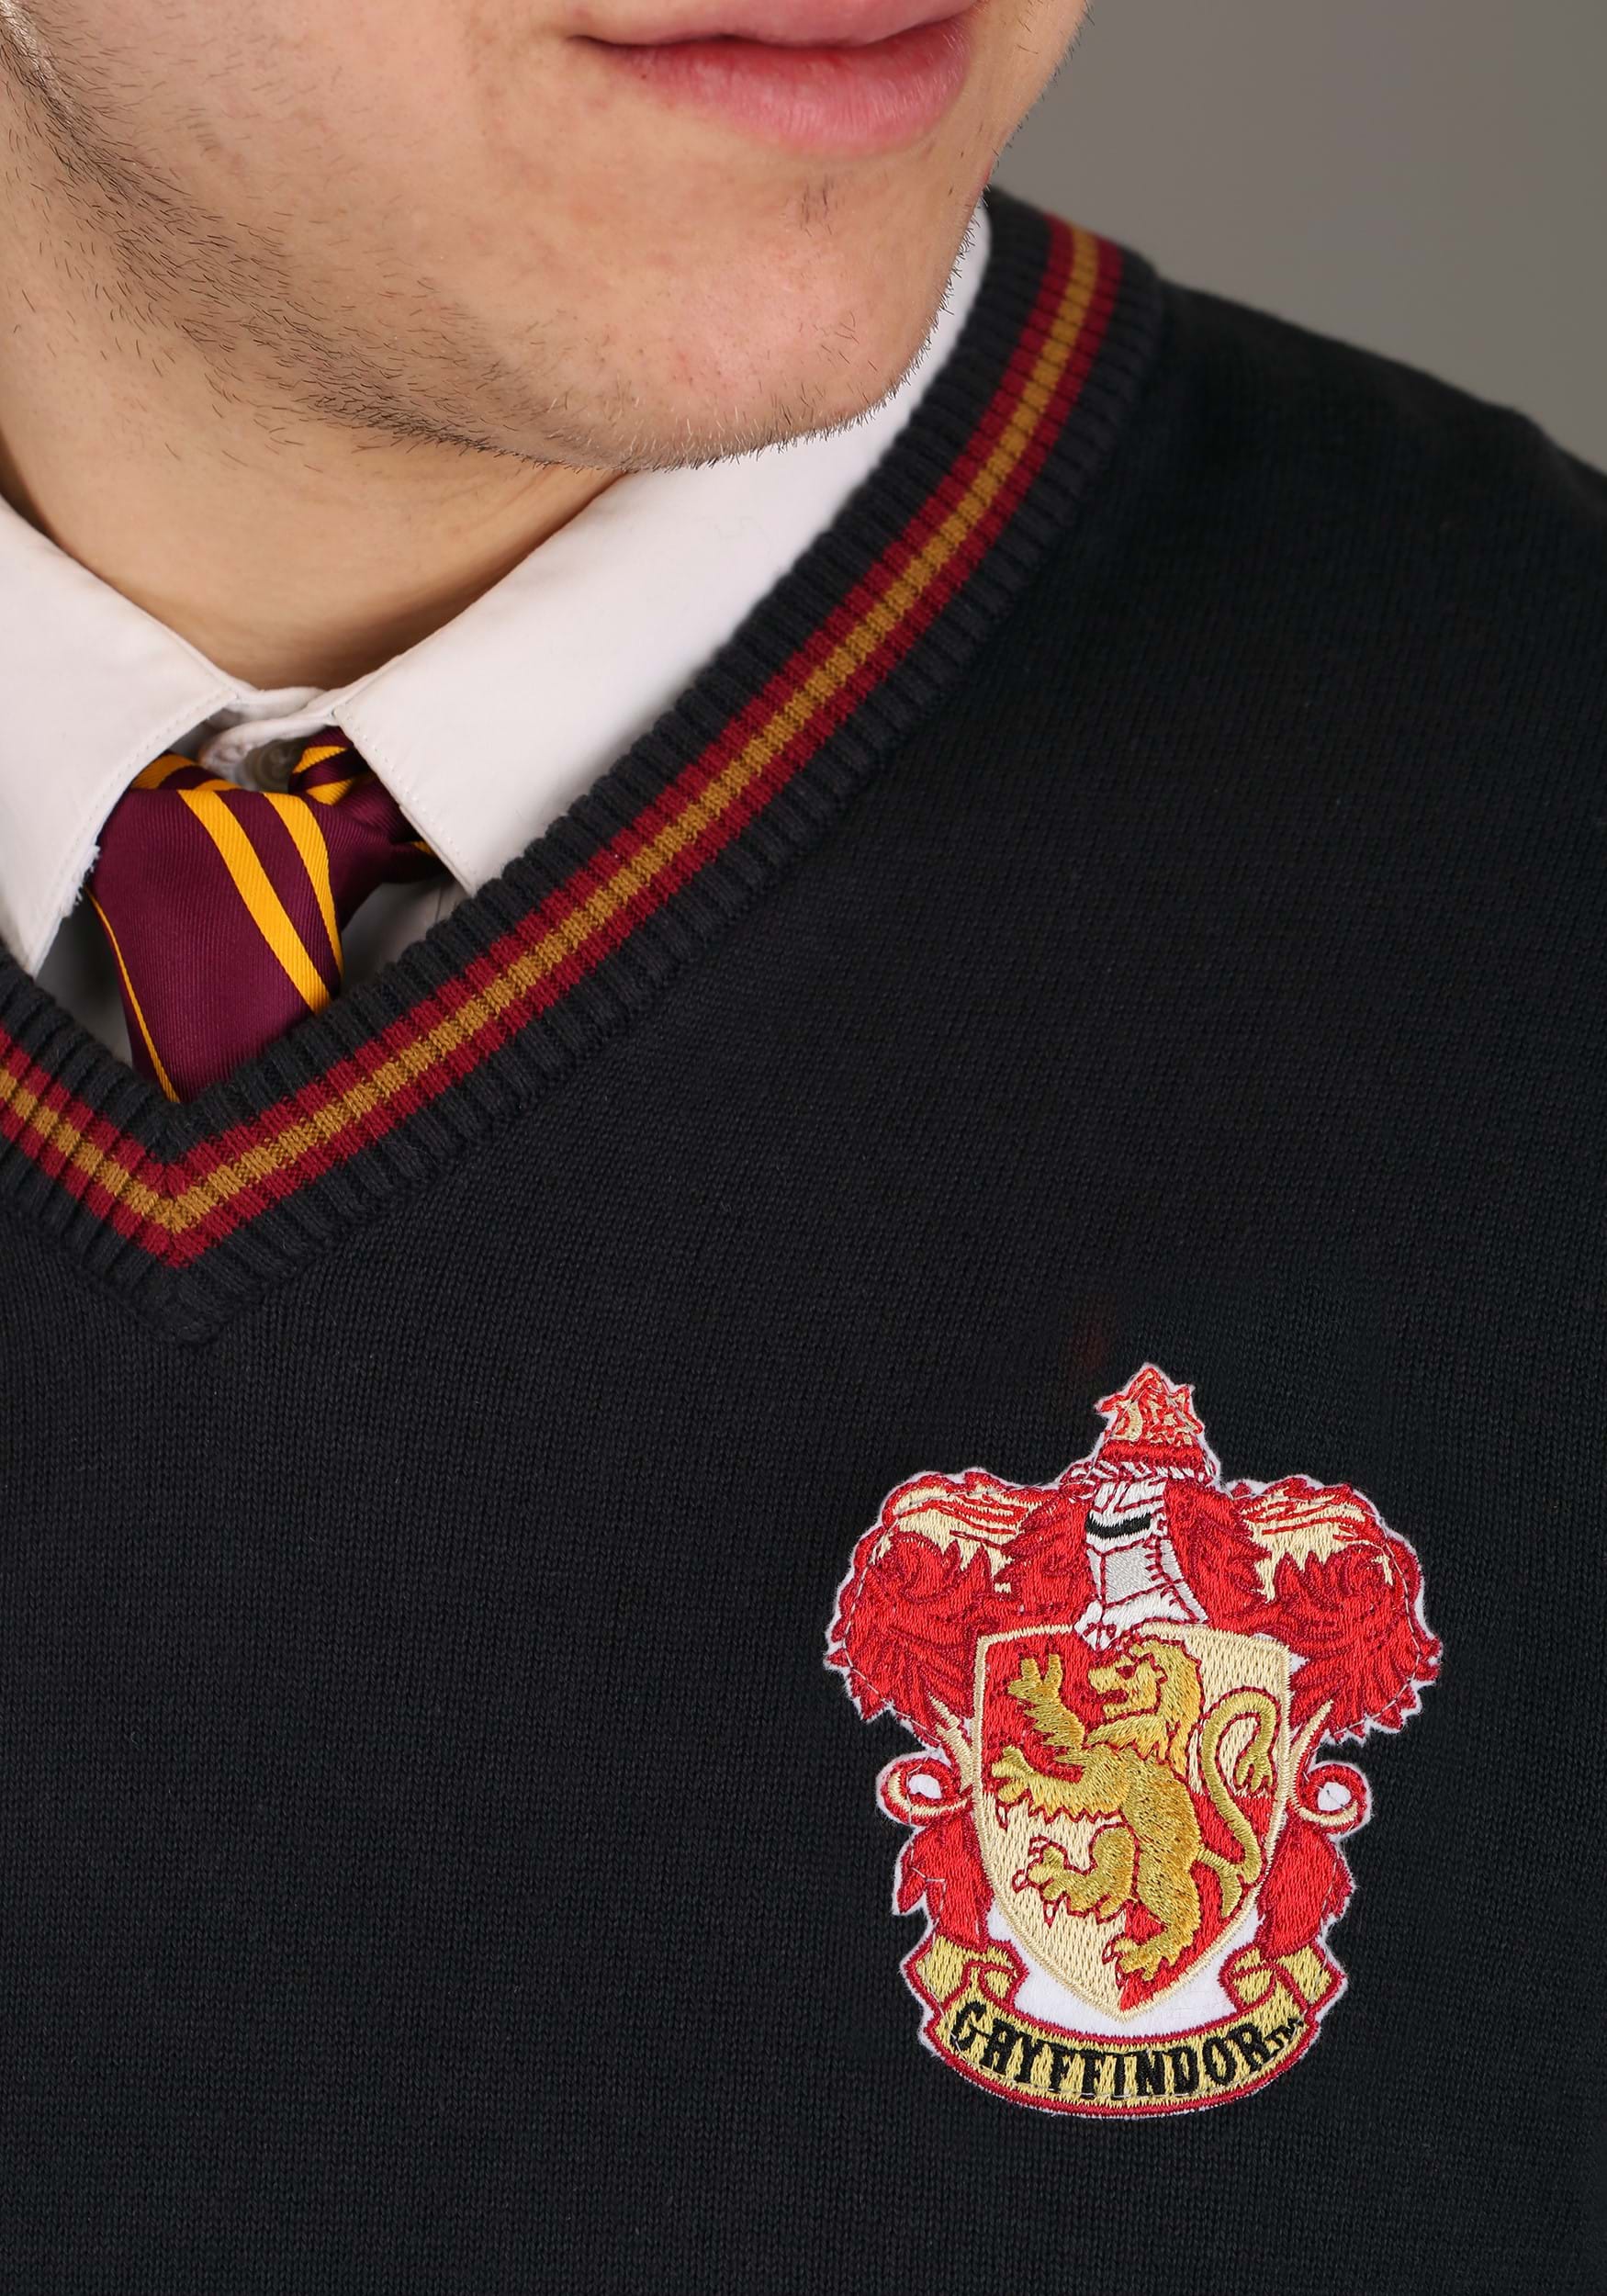 Adult Gryffindor Uniform Harry Potter Sweater